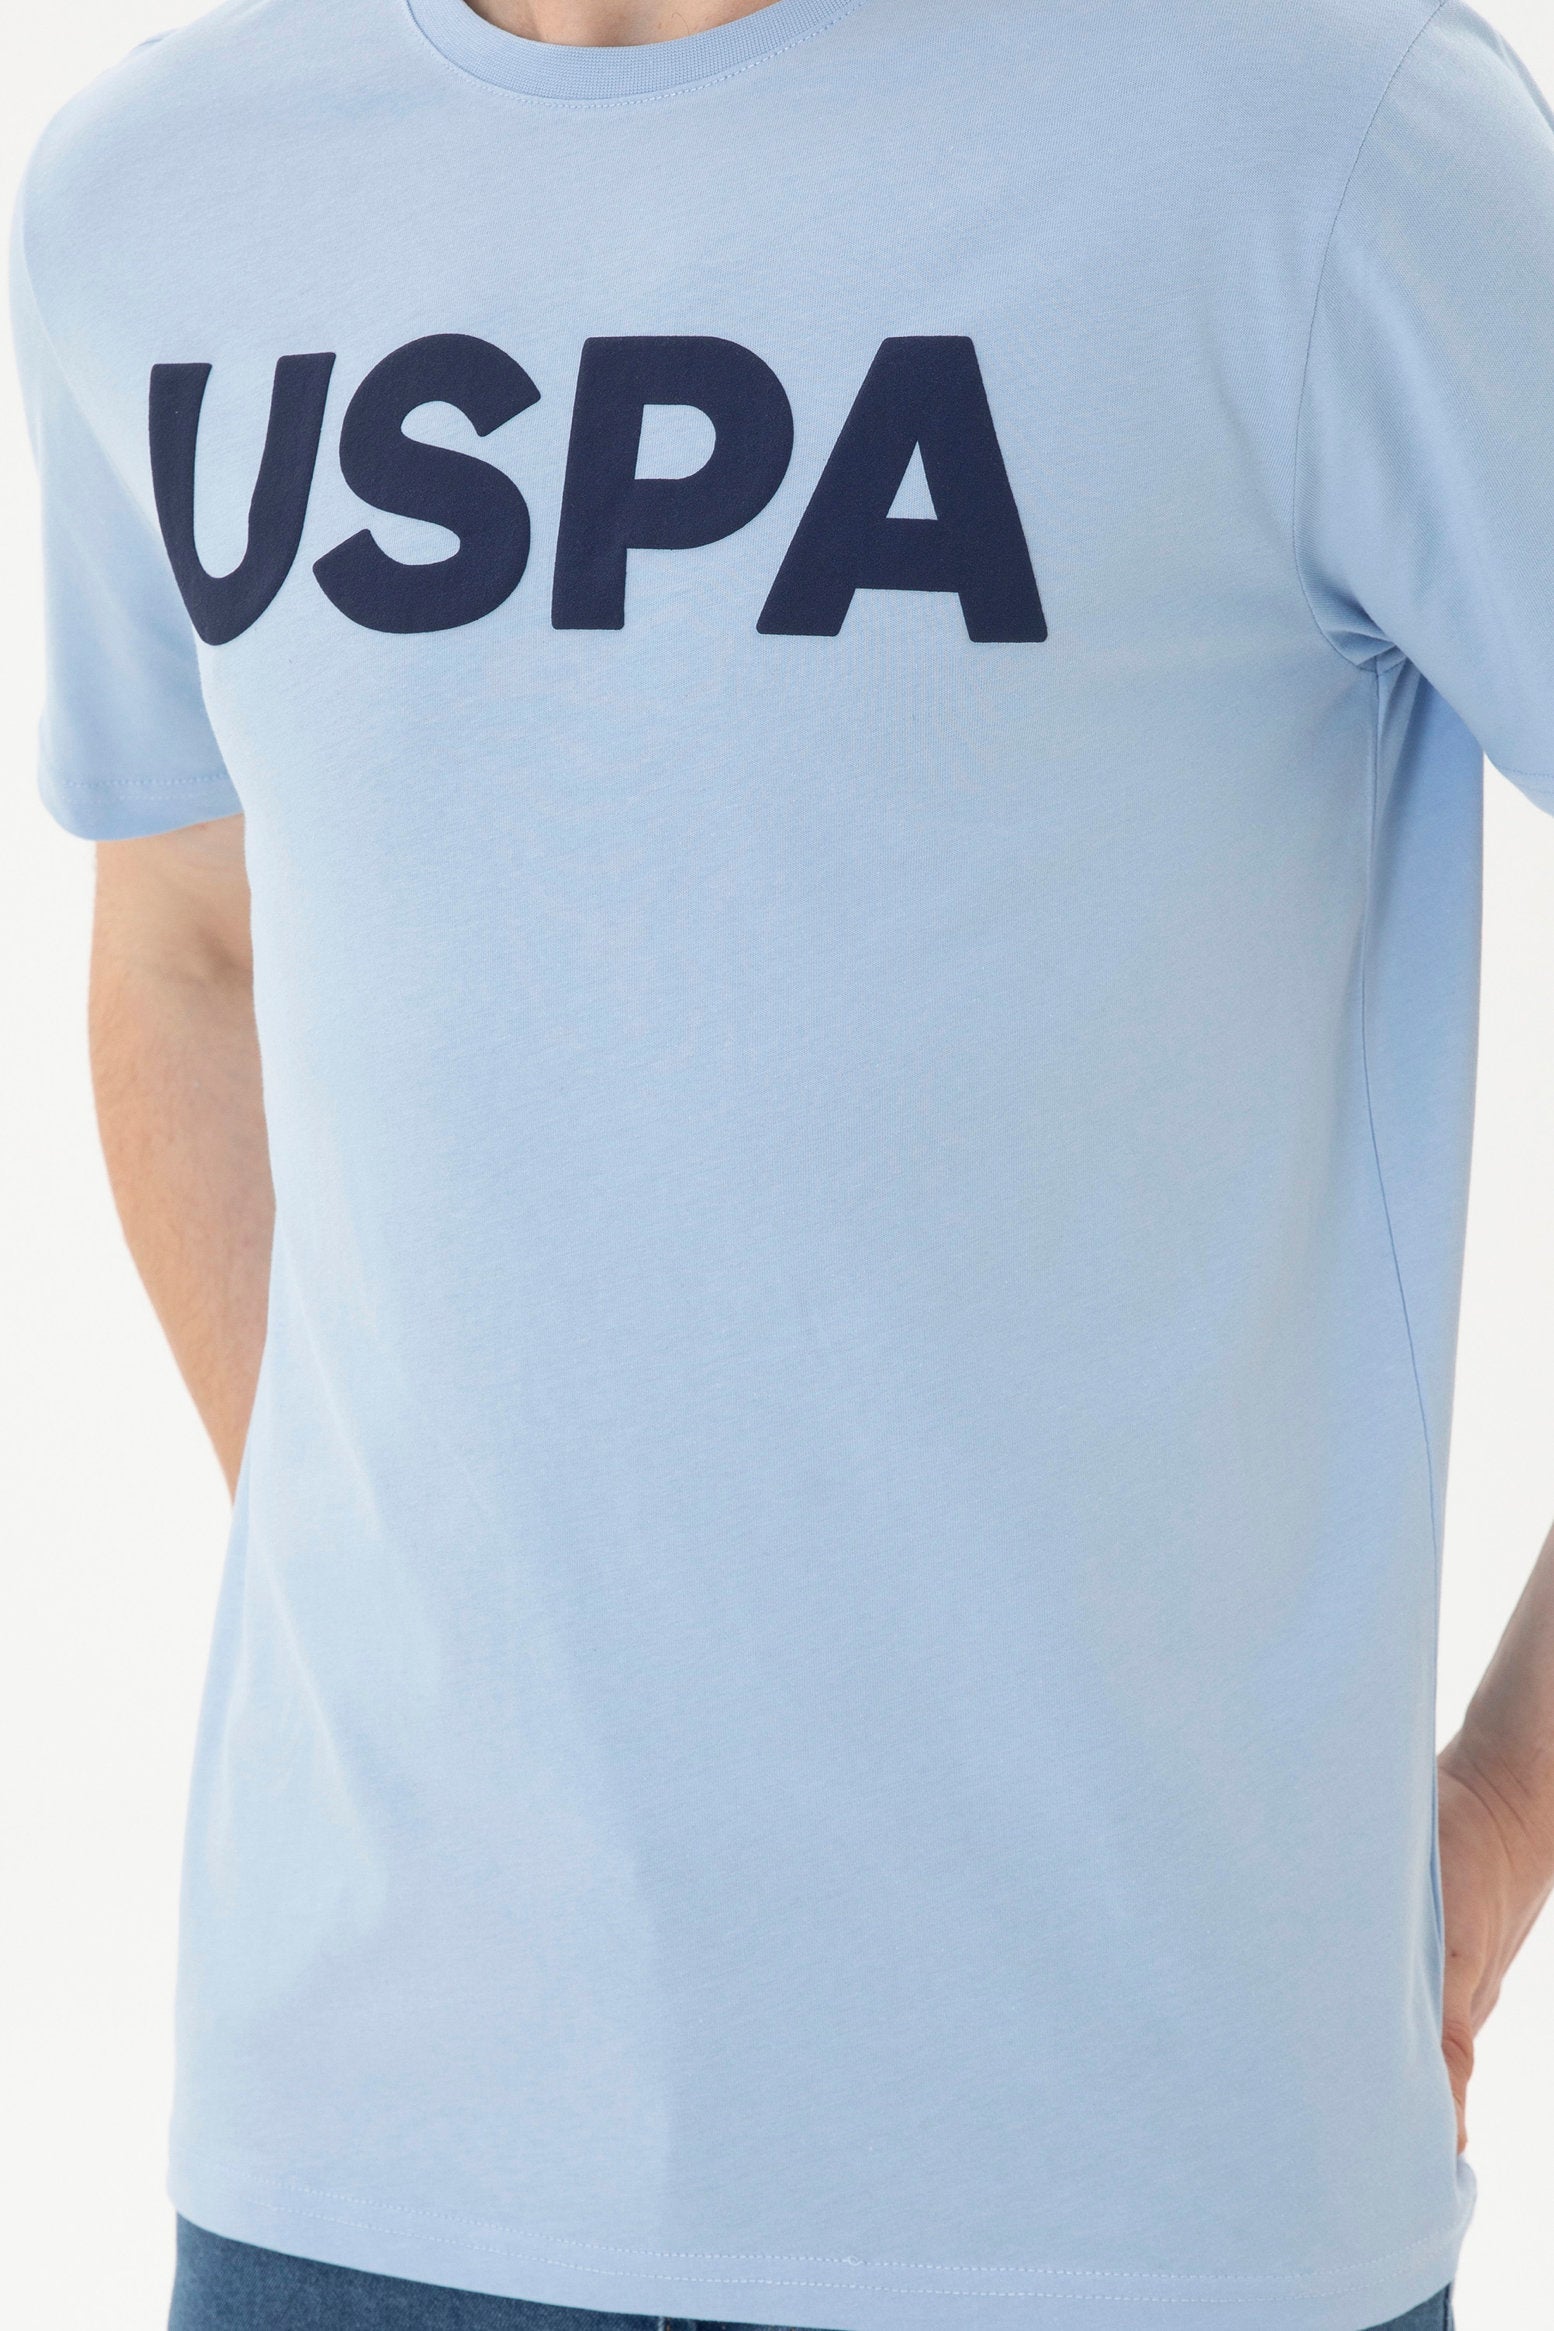 Round Neck T-Shirt With Uspa Logo_G081SZ0110 1795459_VR003_06